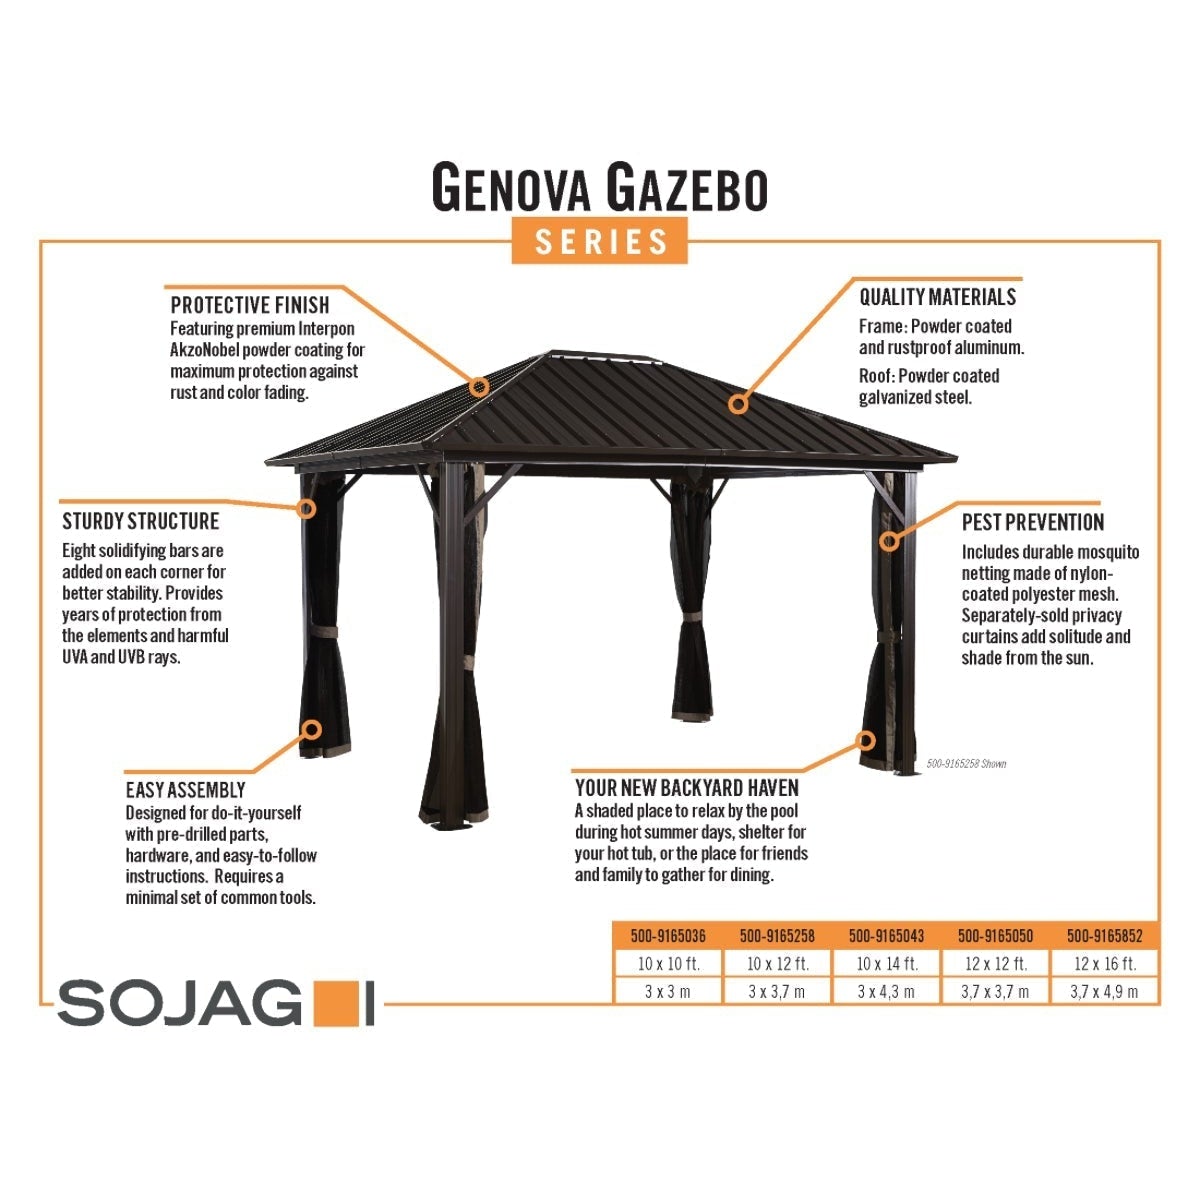 Sojag Genova Gazebo 10 x 14 ft - Delightful Yard